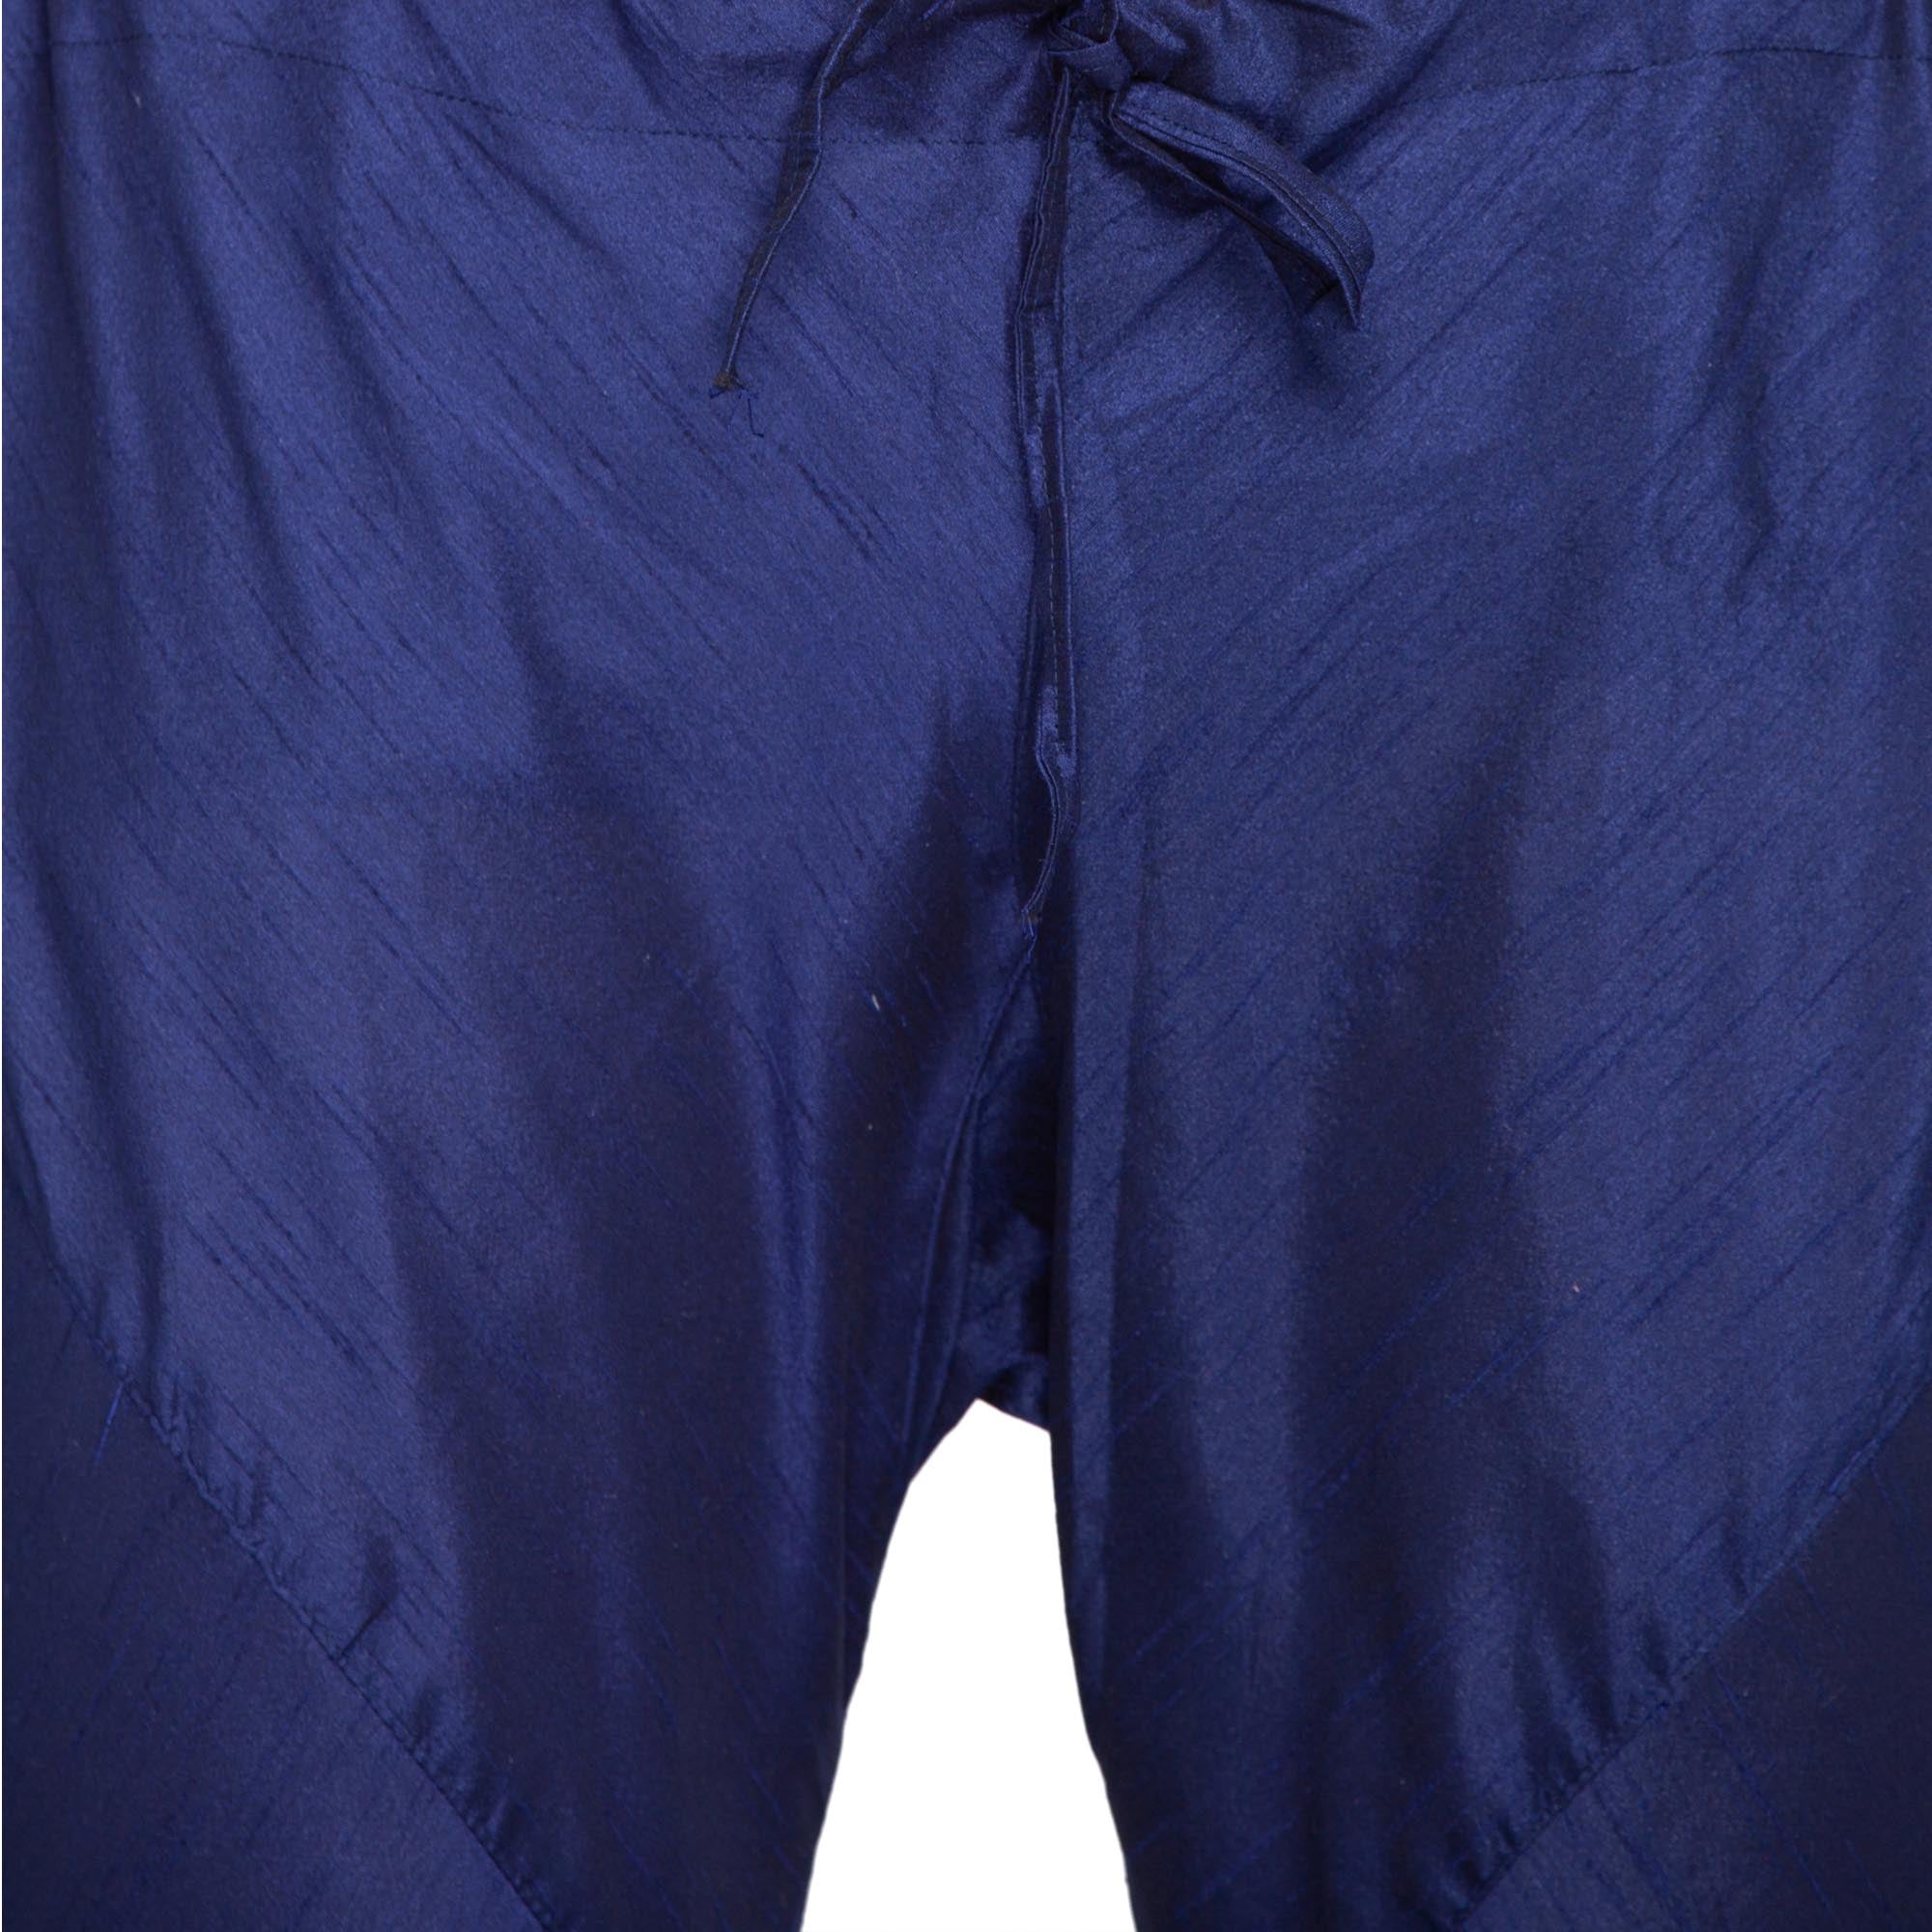 Men's Dark Blue Cotton Silk Blend Kurta and Pyjama Set